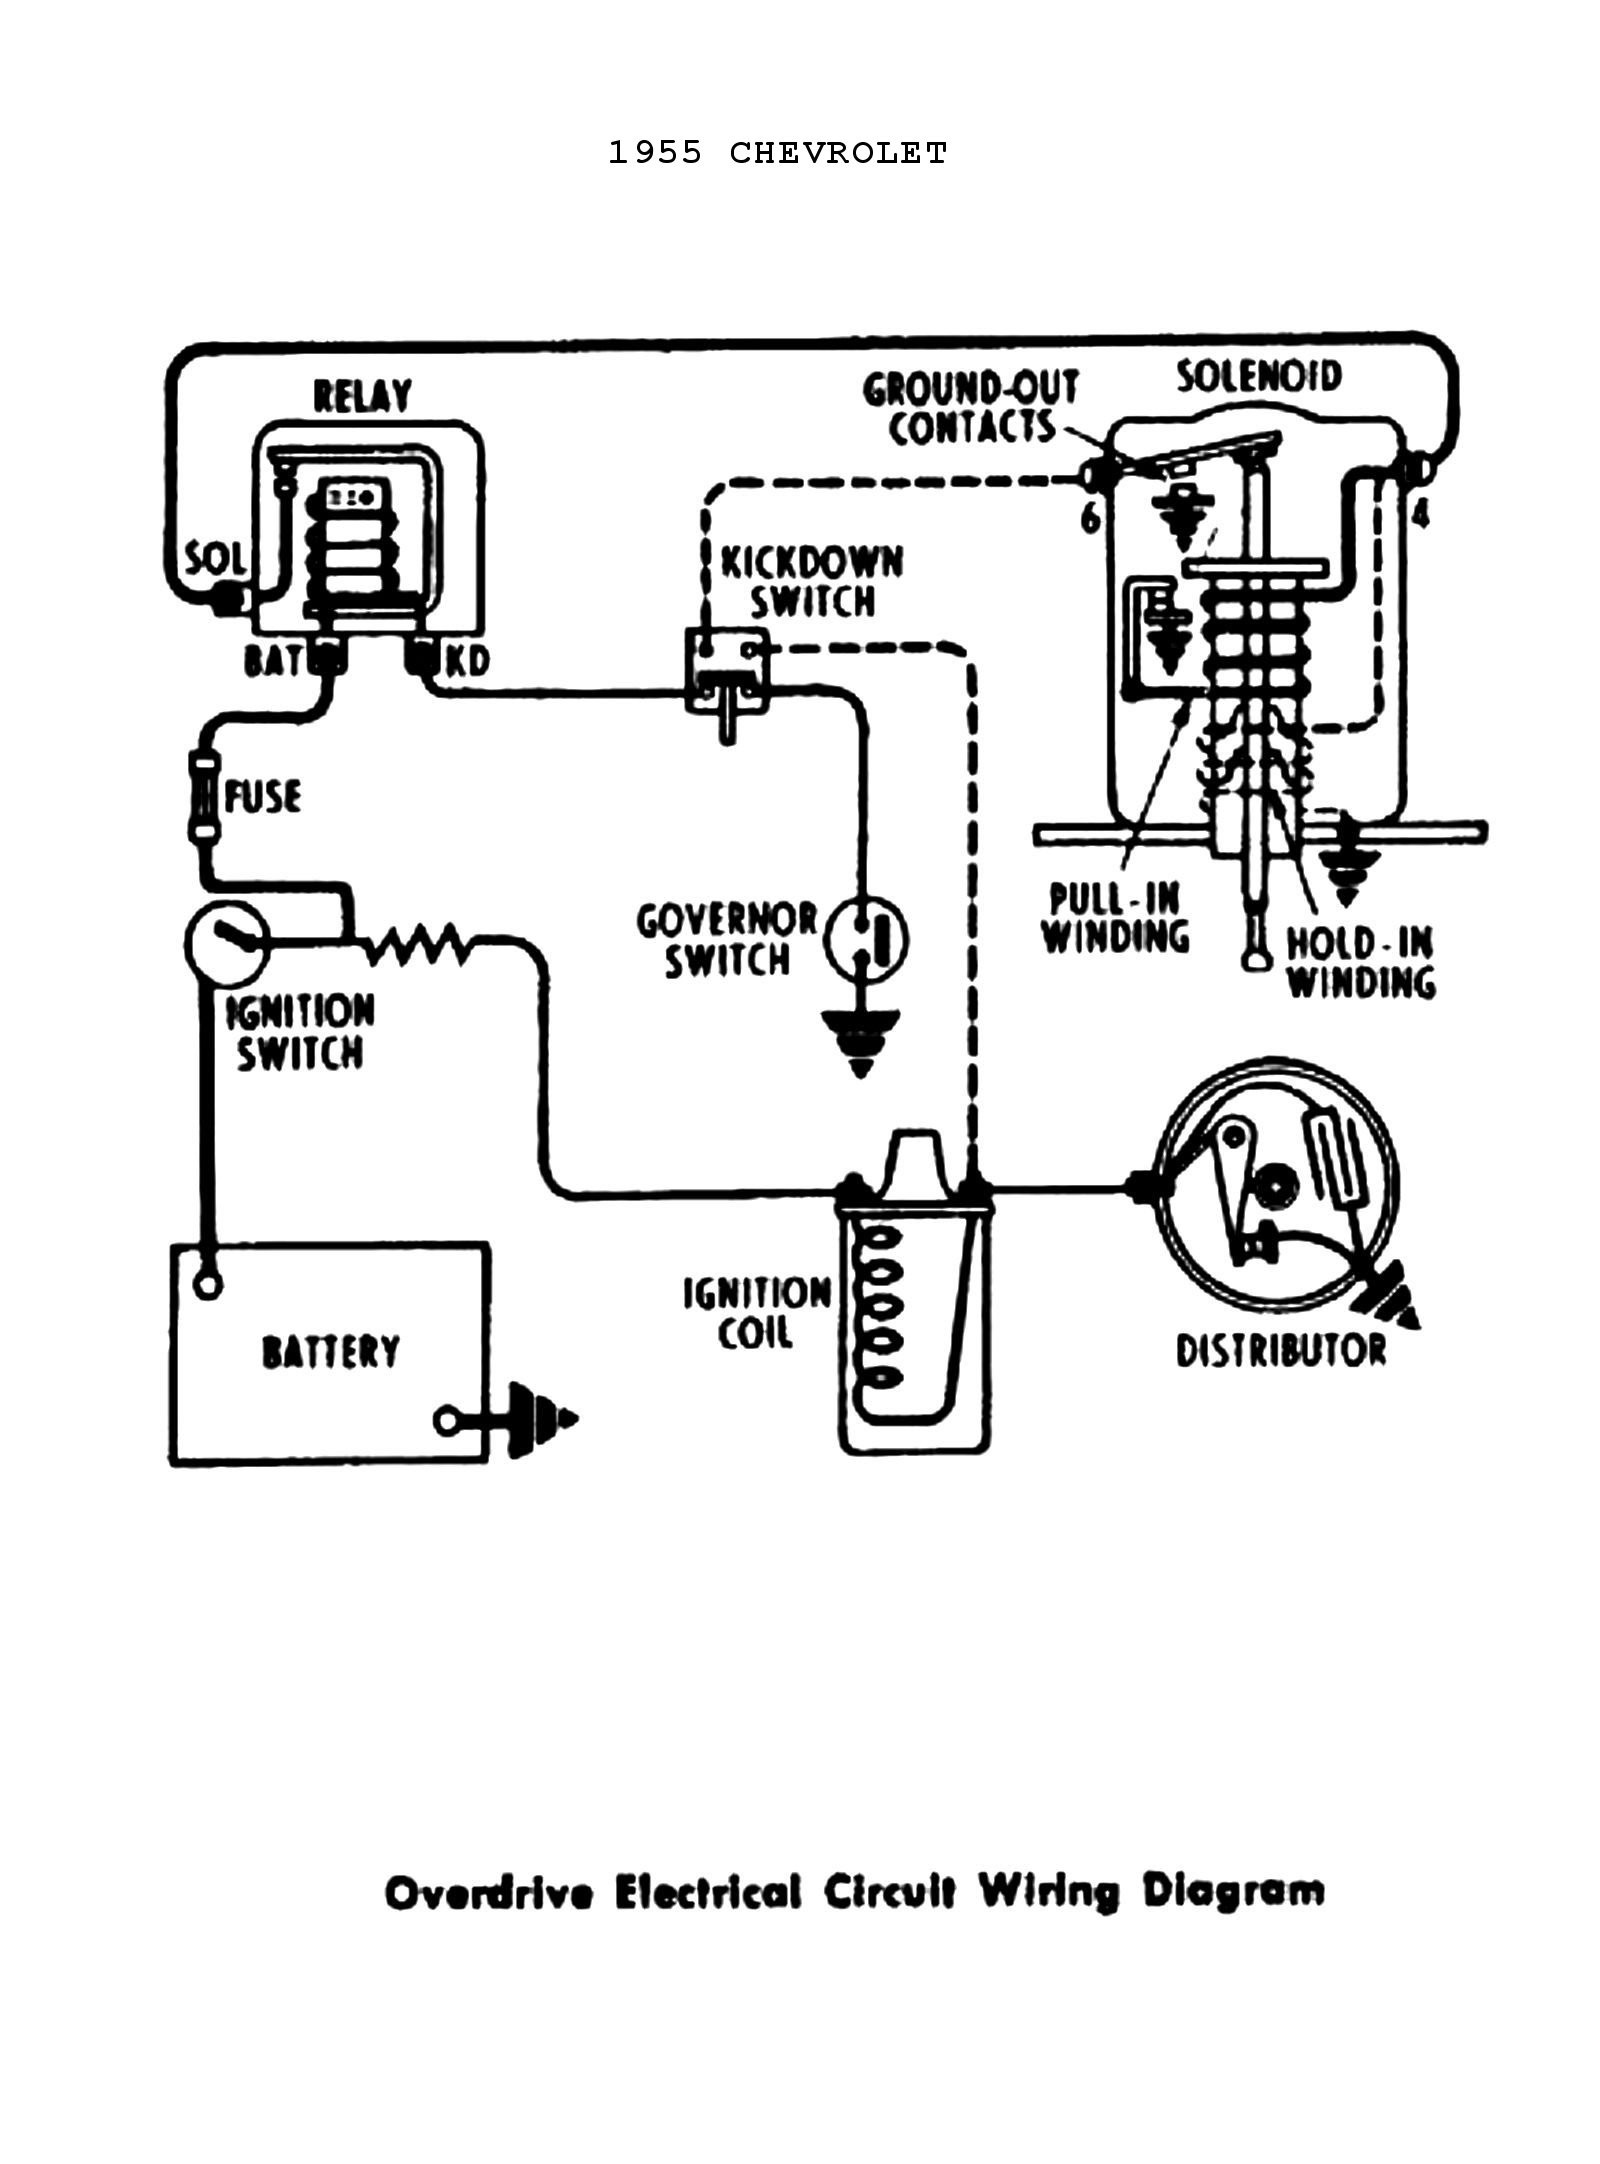 Chevy Truck Wiring Diagram Chevy Wiring Diagrams Of Chevy Truck Wiring Diagram